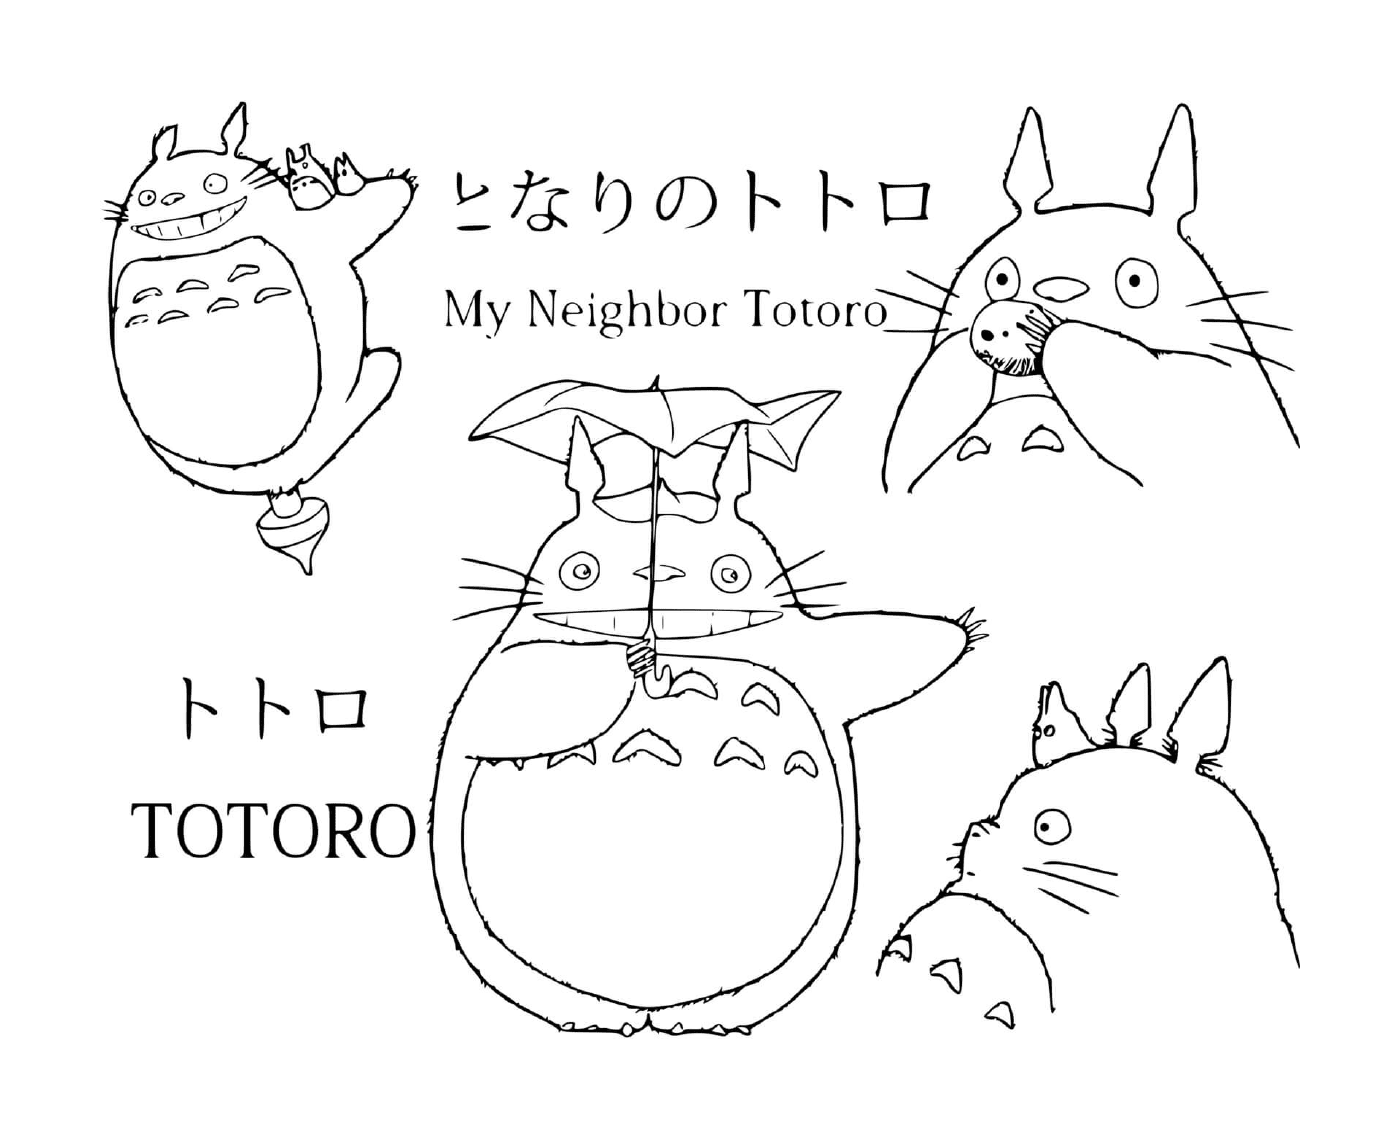  Grupo de Totoro dibujado en diferentes poses 